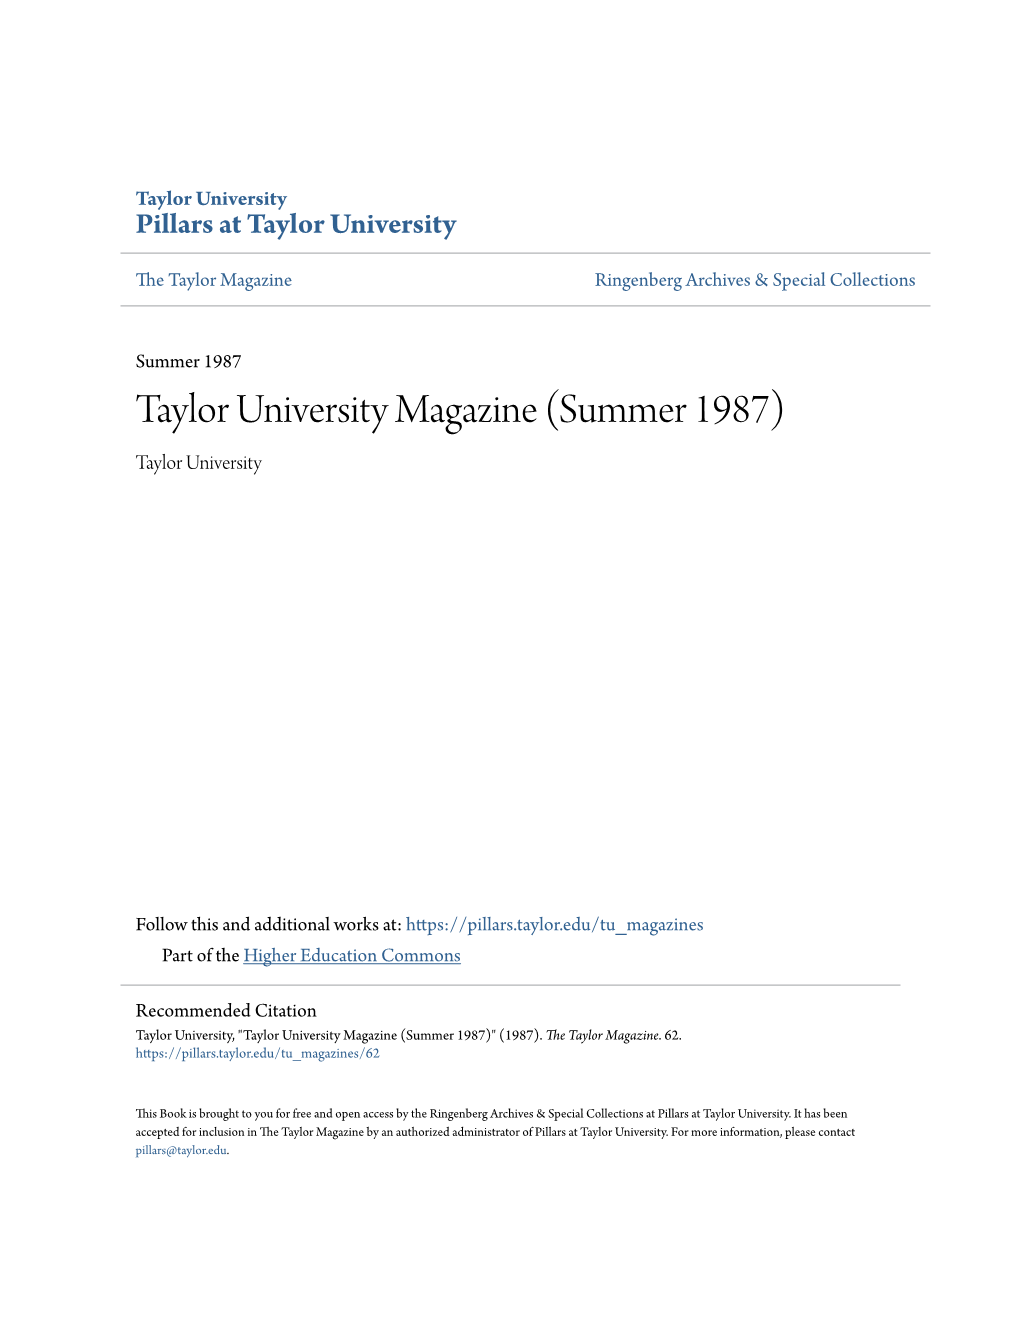 Taylor University Magazine (Summer 1987) Taylor University